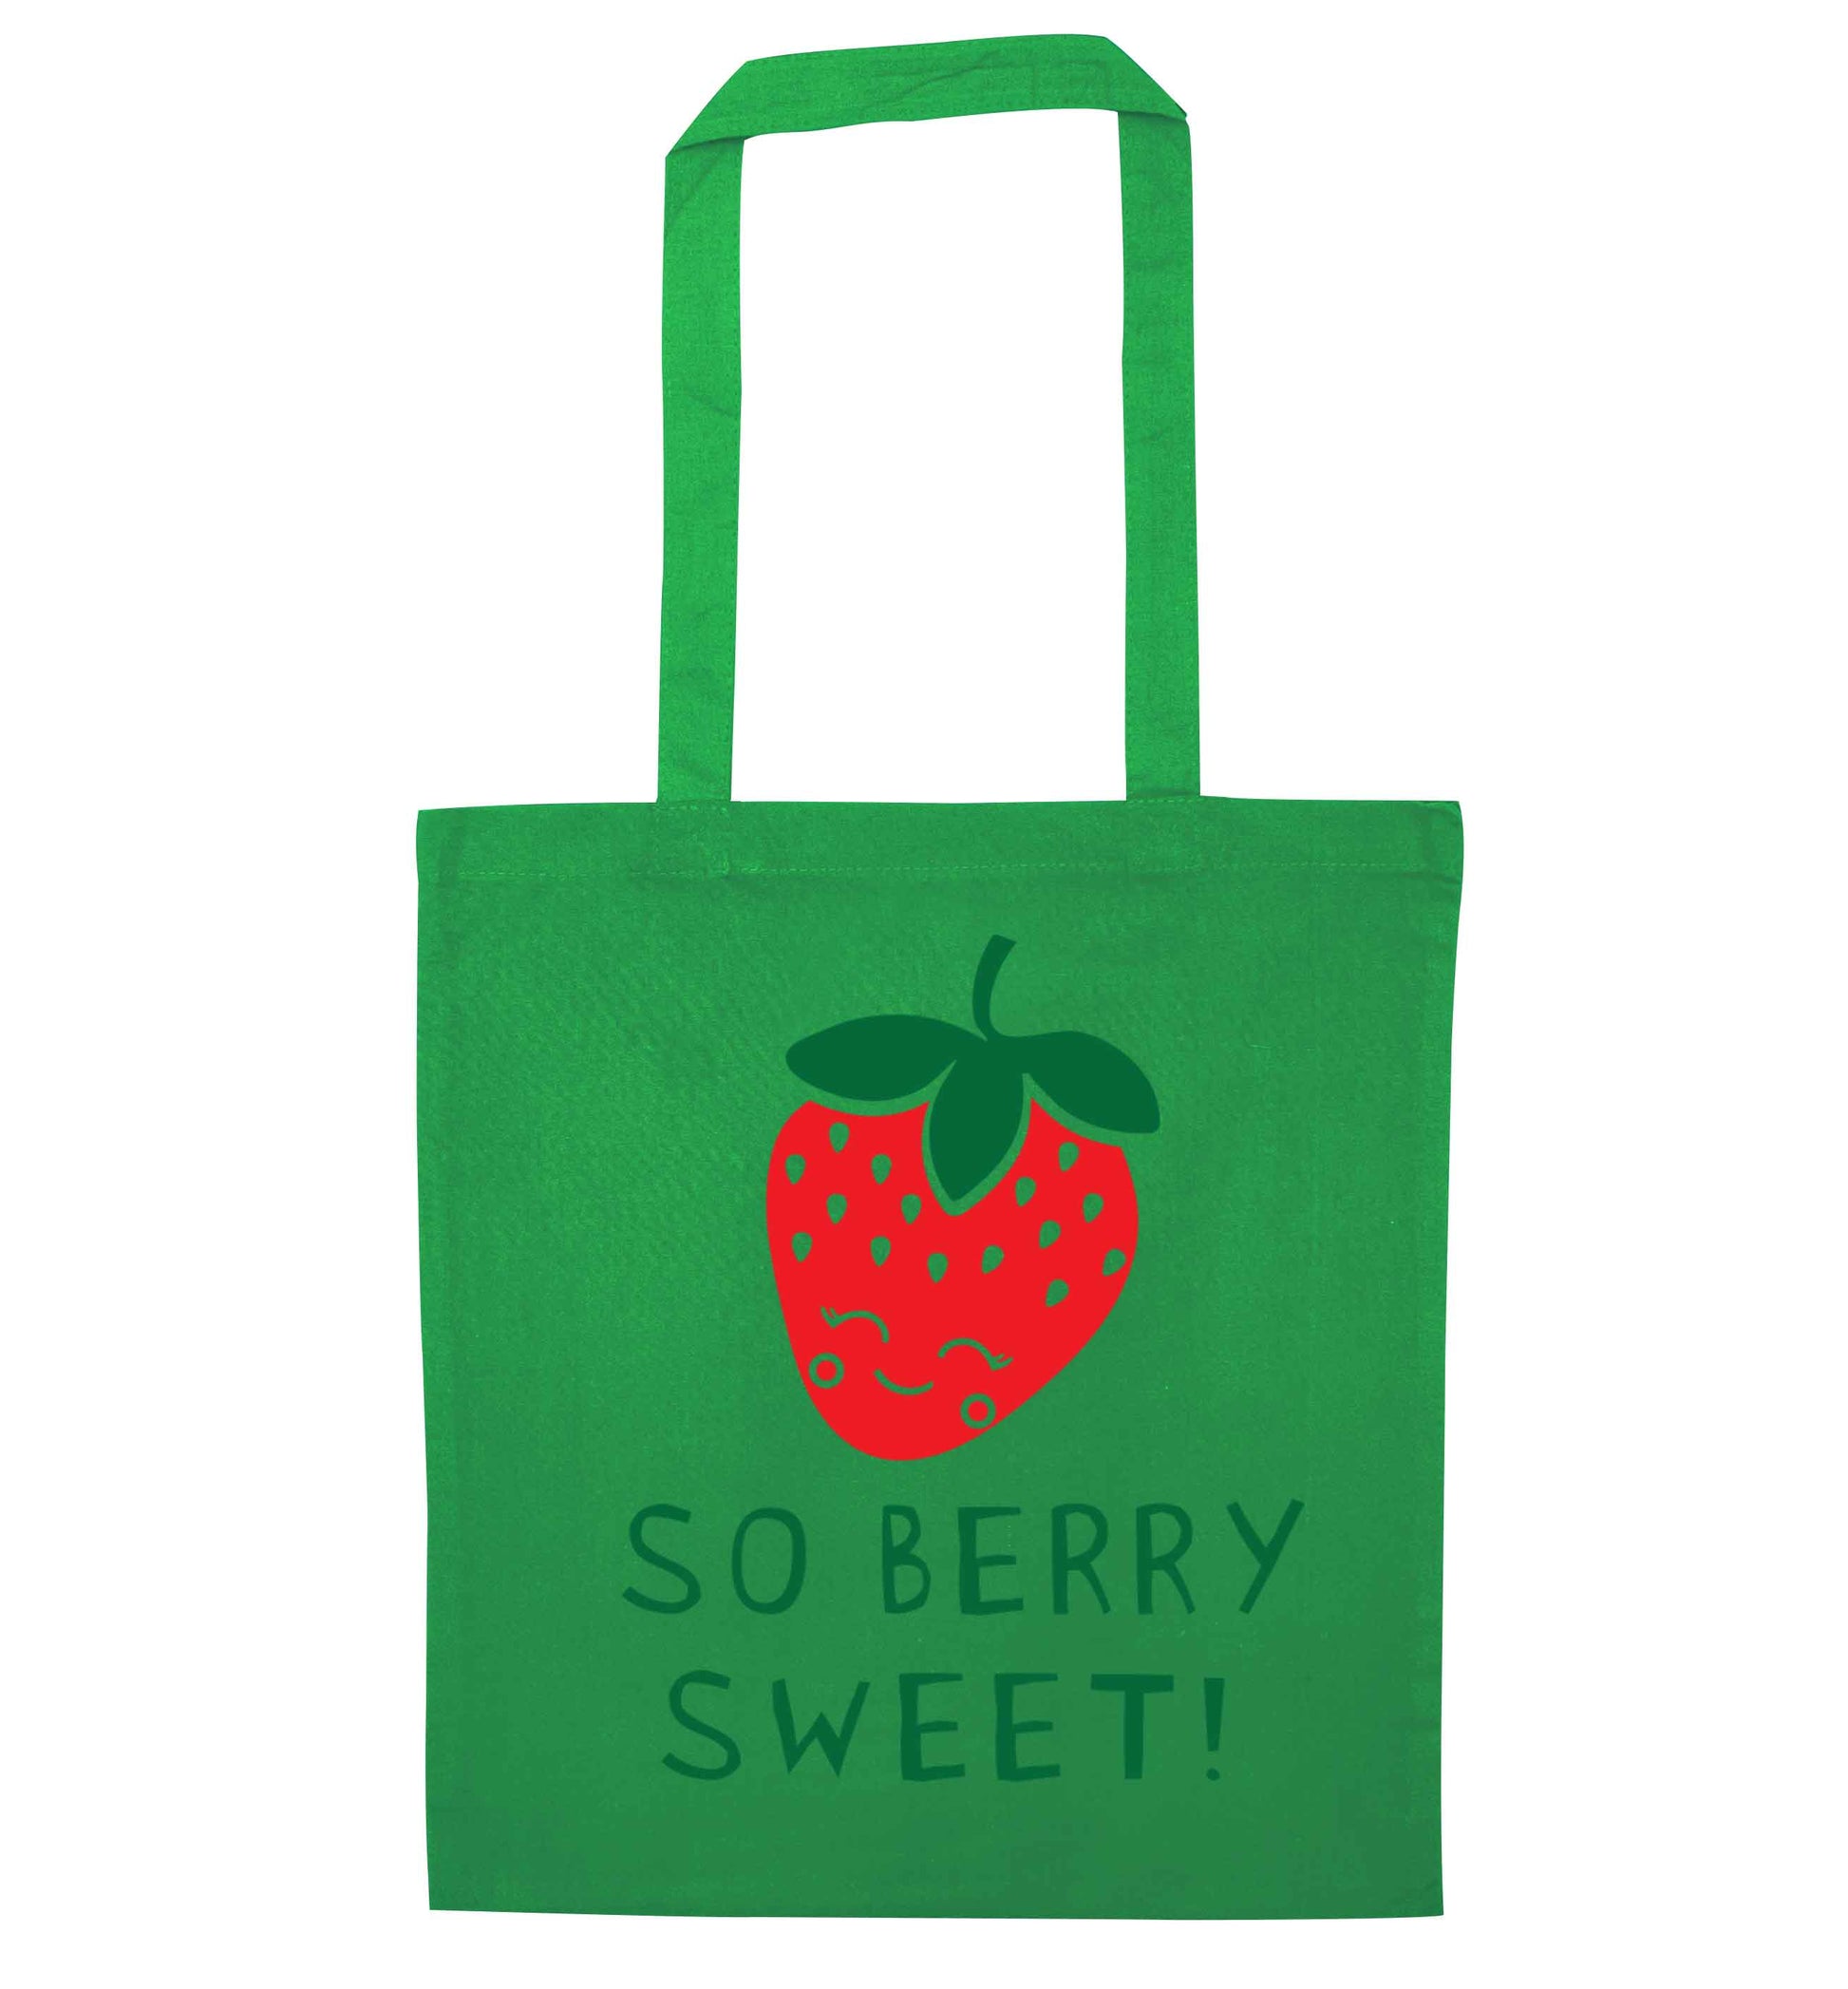 So berry sweet green tote bag